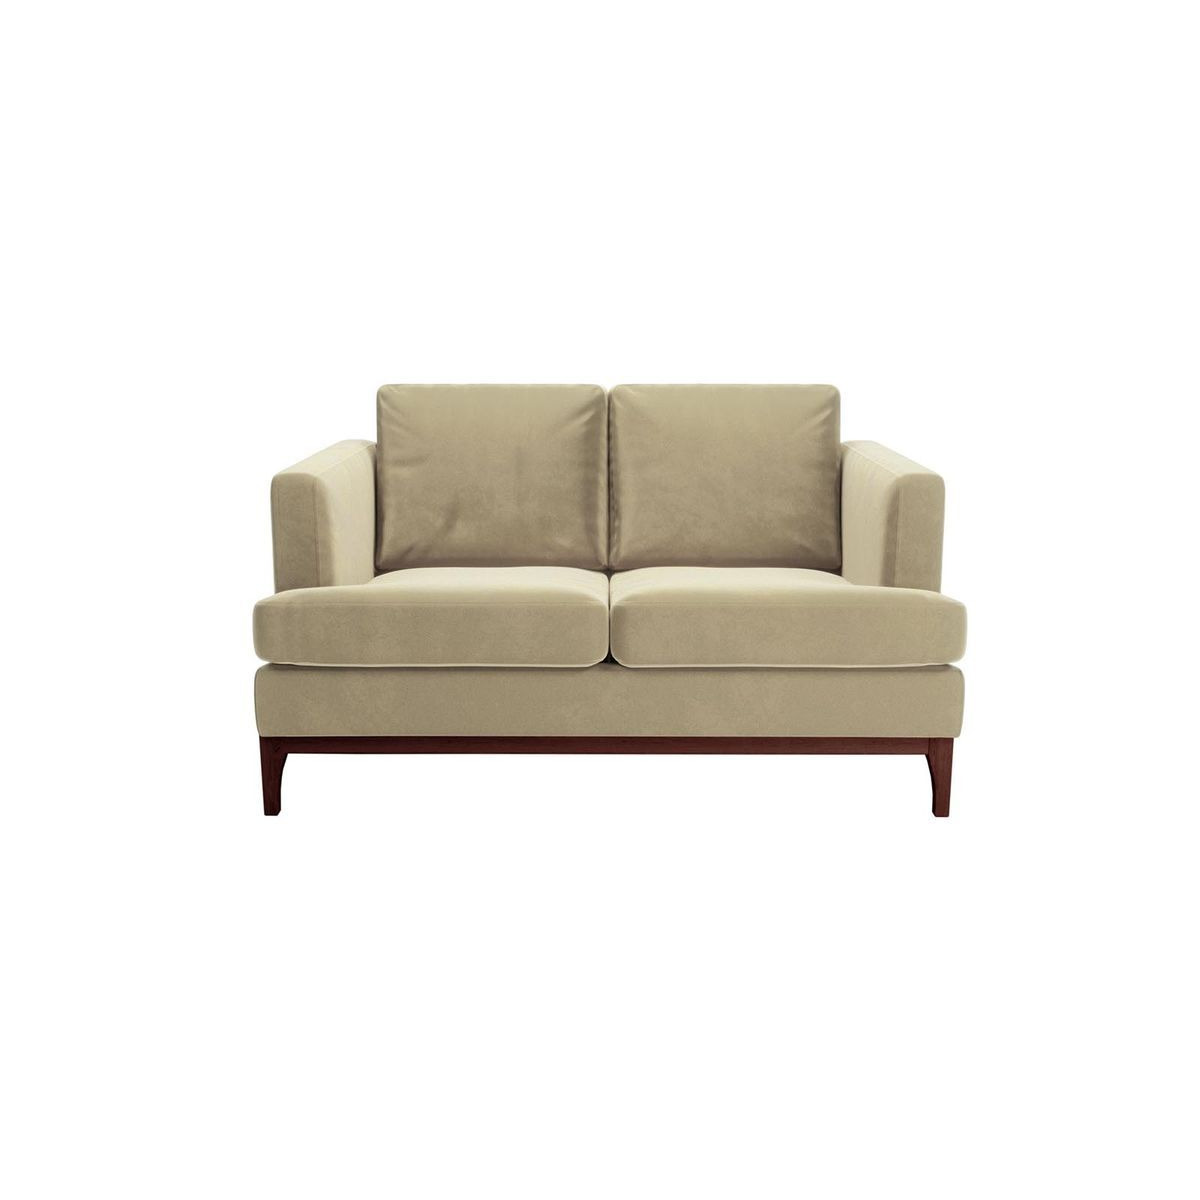 Scarlett 2 Seater Sofa, mink, Leg colour: dark oak - image 1